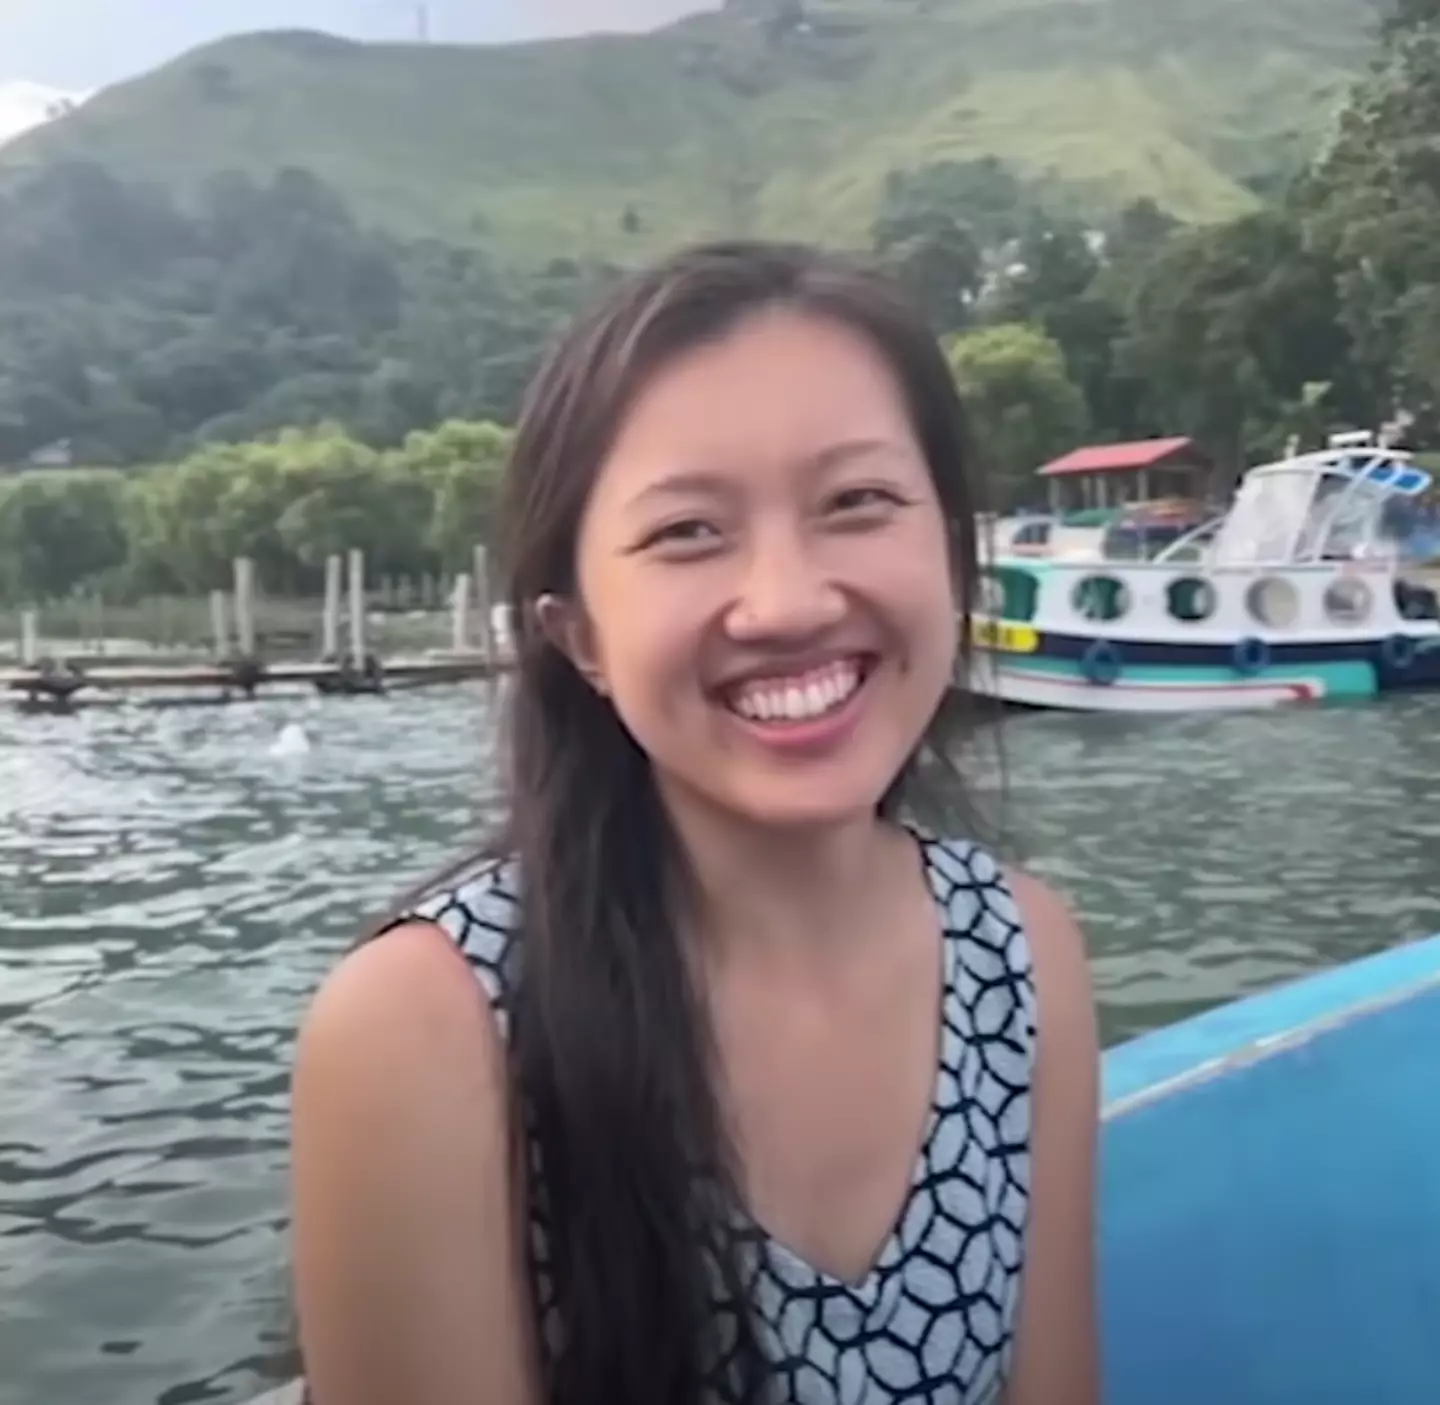 She was on a week-long retreat in Lake Atitlán in Guatemala.